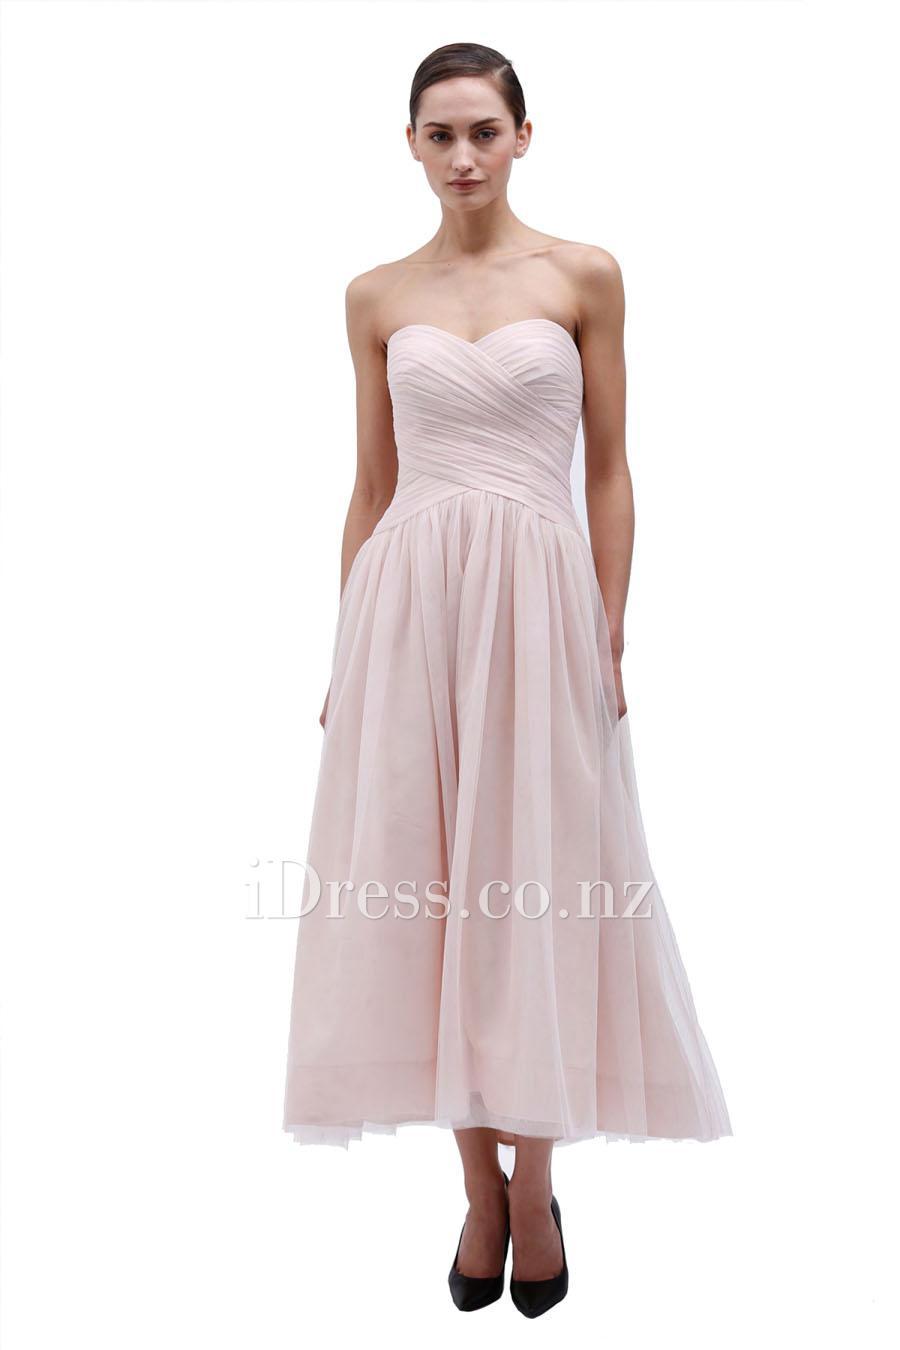 Mariage - Strapless Blush Tea Length A-line Sweetheart Bridesmaid Dress